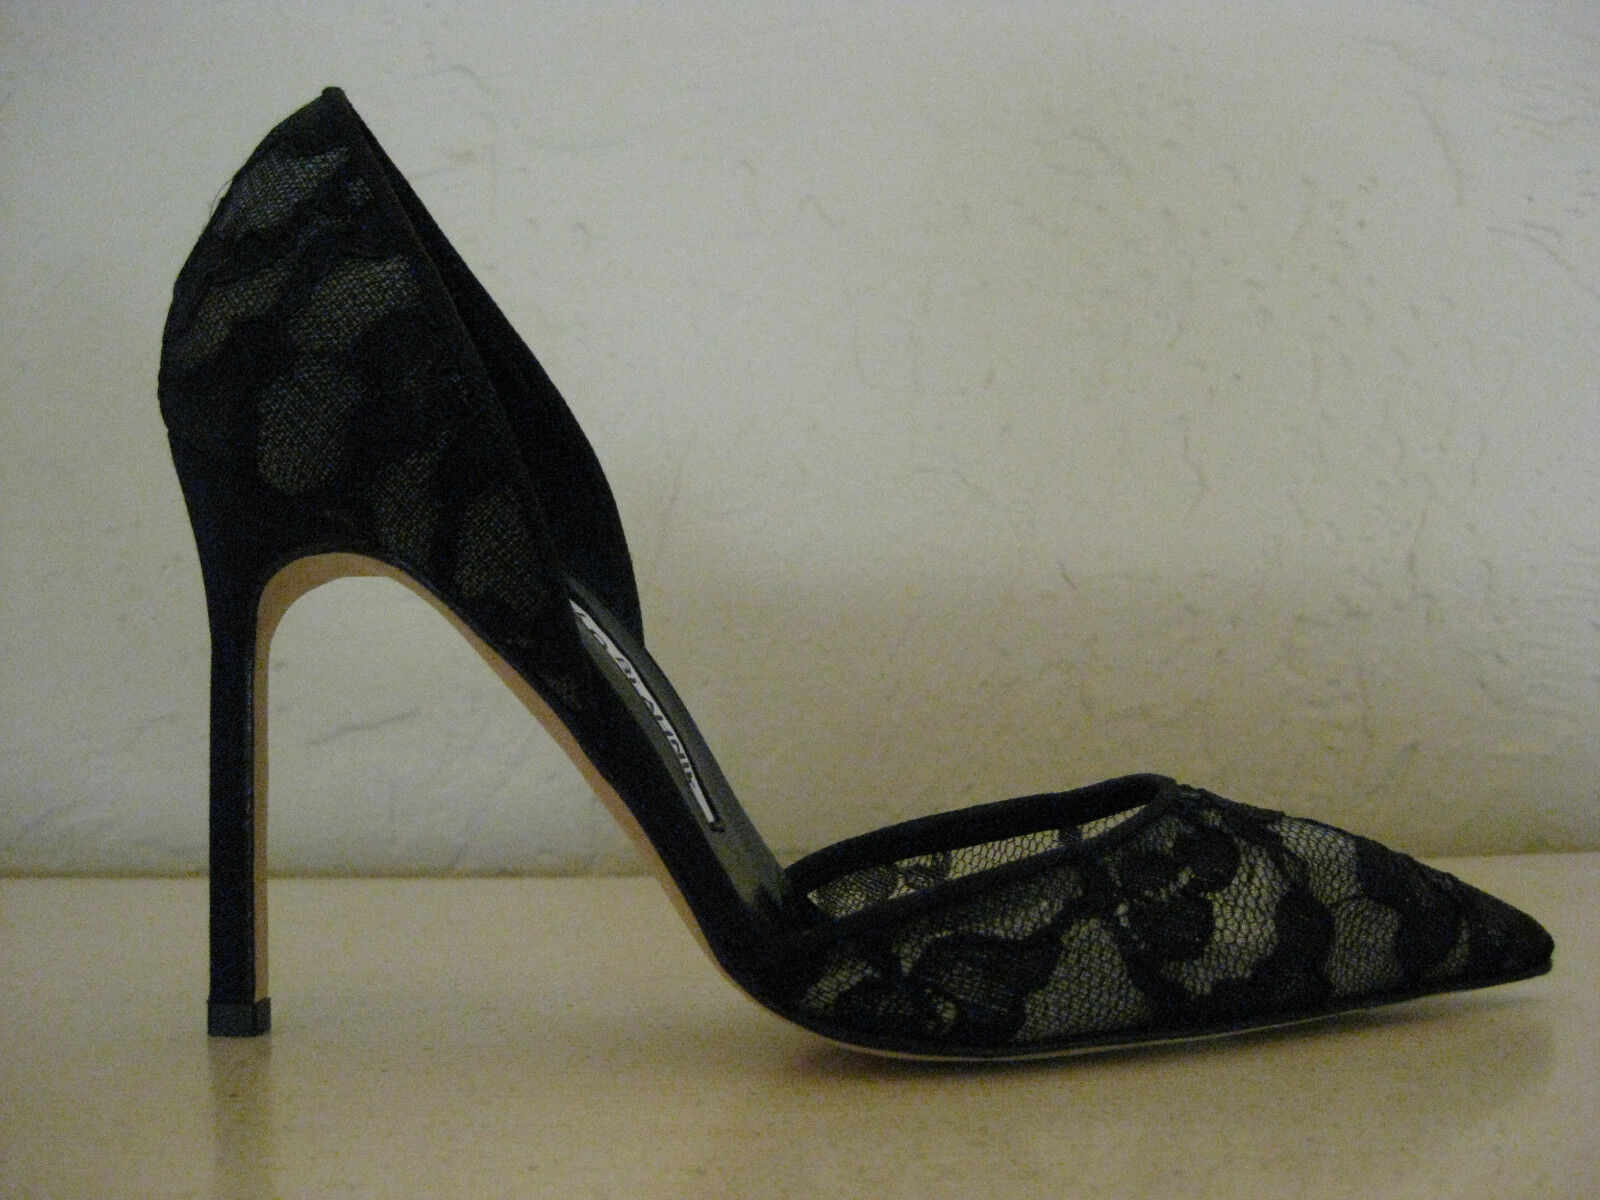 New MANOLO BLAHNIK Tayler Lace Pointed d\'orsay Pump Black 37 6.5 NIB $735  shoes